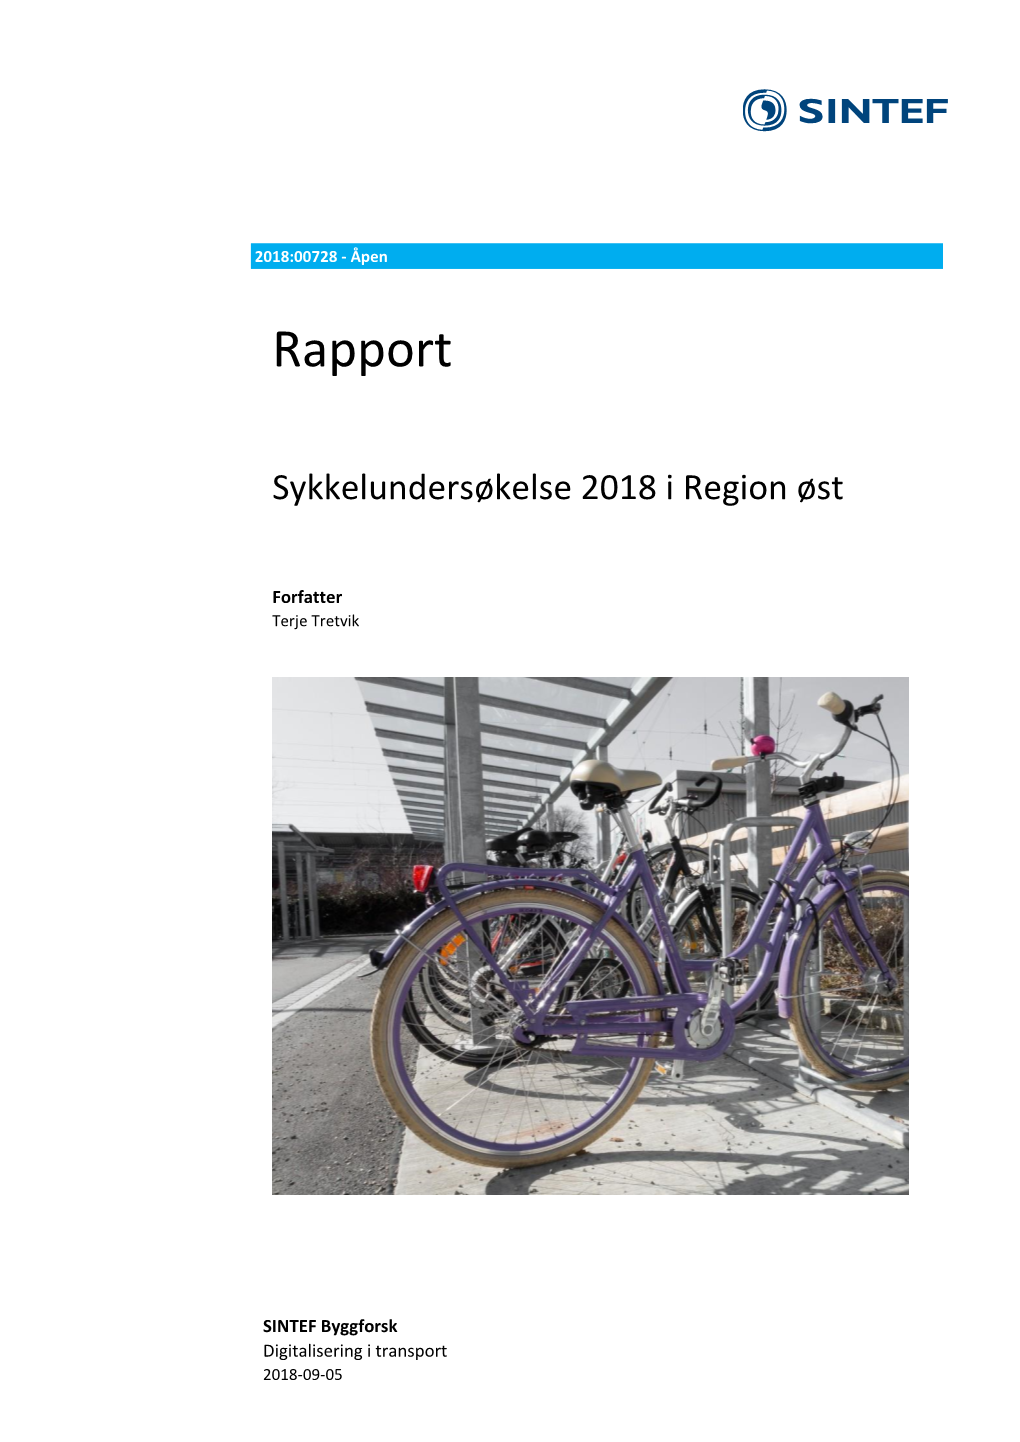 SINTEF Byggforsk Digitalisering I Transport 2018-09-05